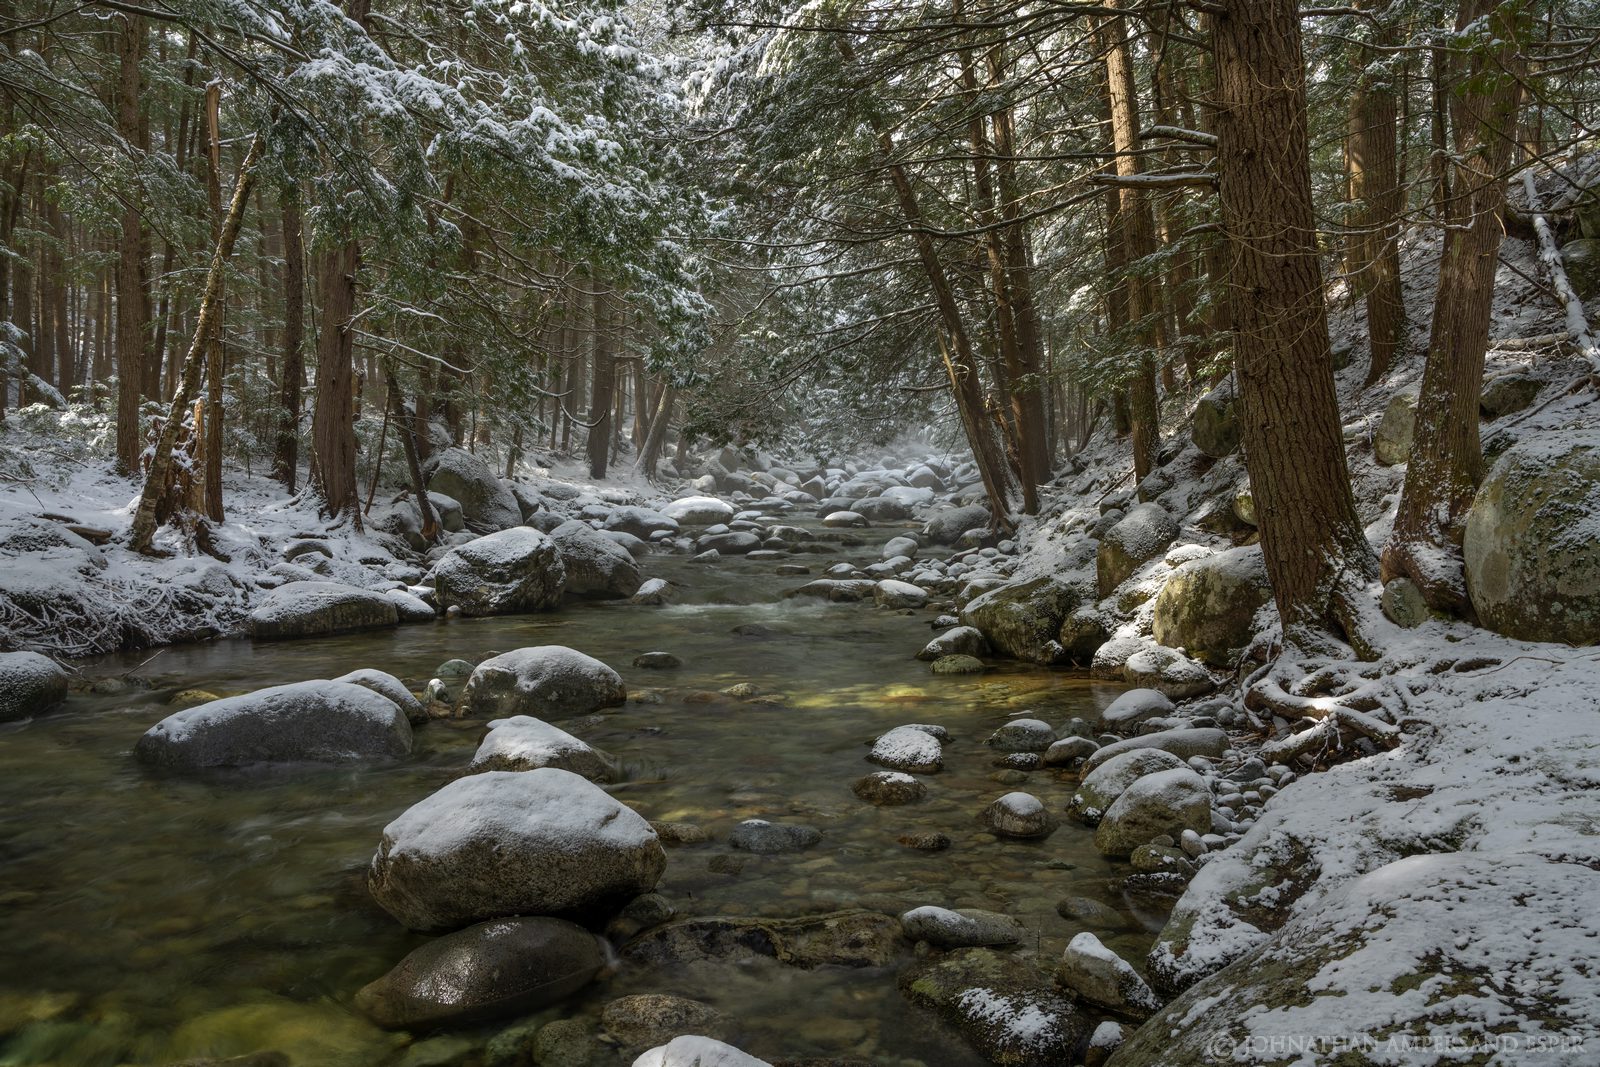 Boquet River,Boquet River South fork,hemlocks,spring snow,spring,snowfall,snowy,stream,river,forest,2020,Adirondack forest